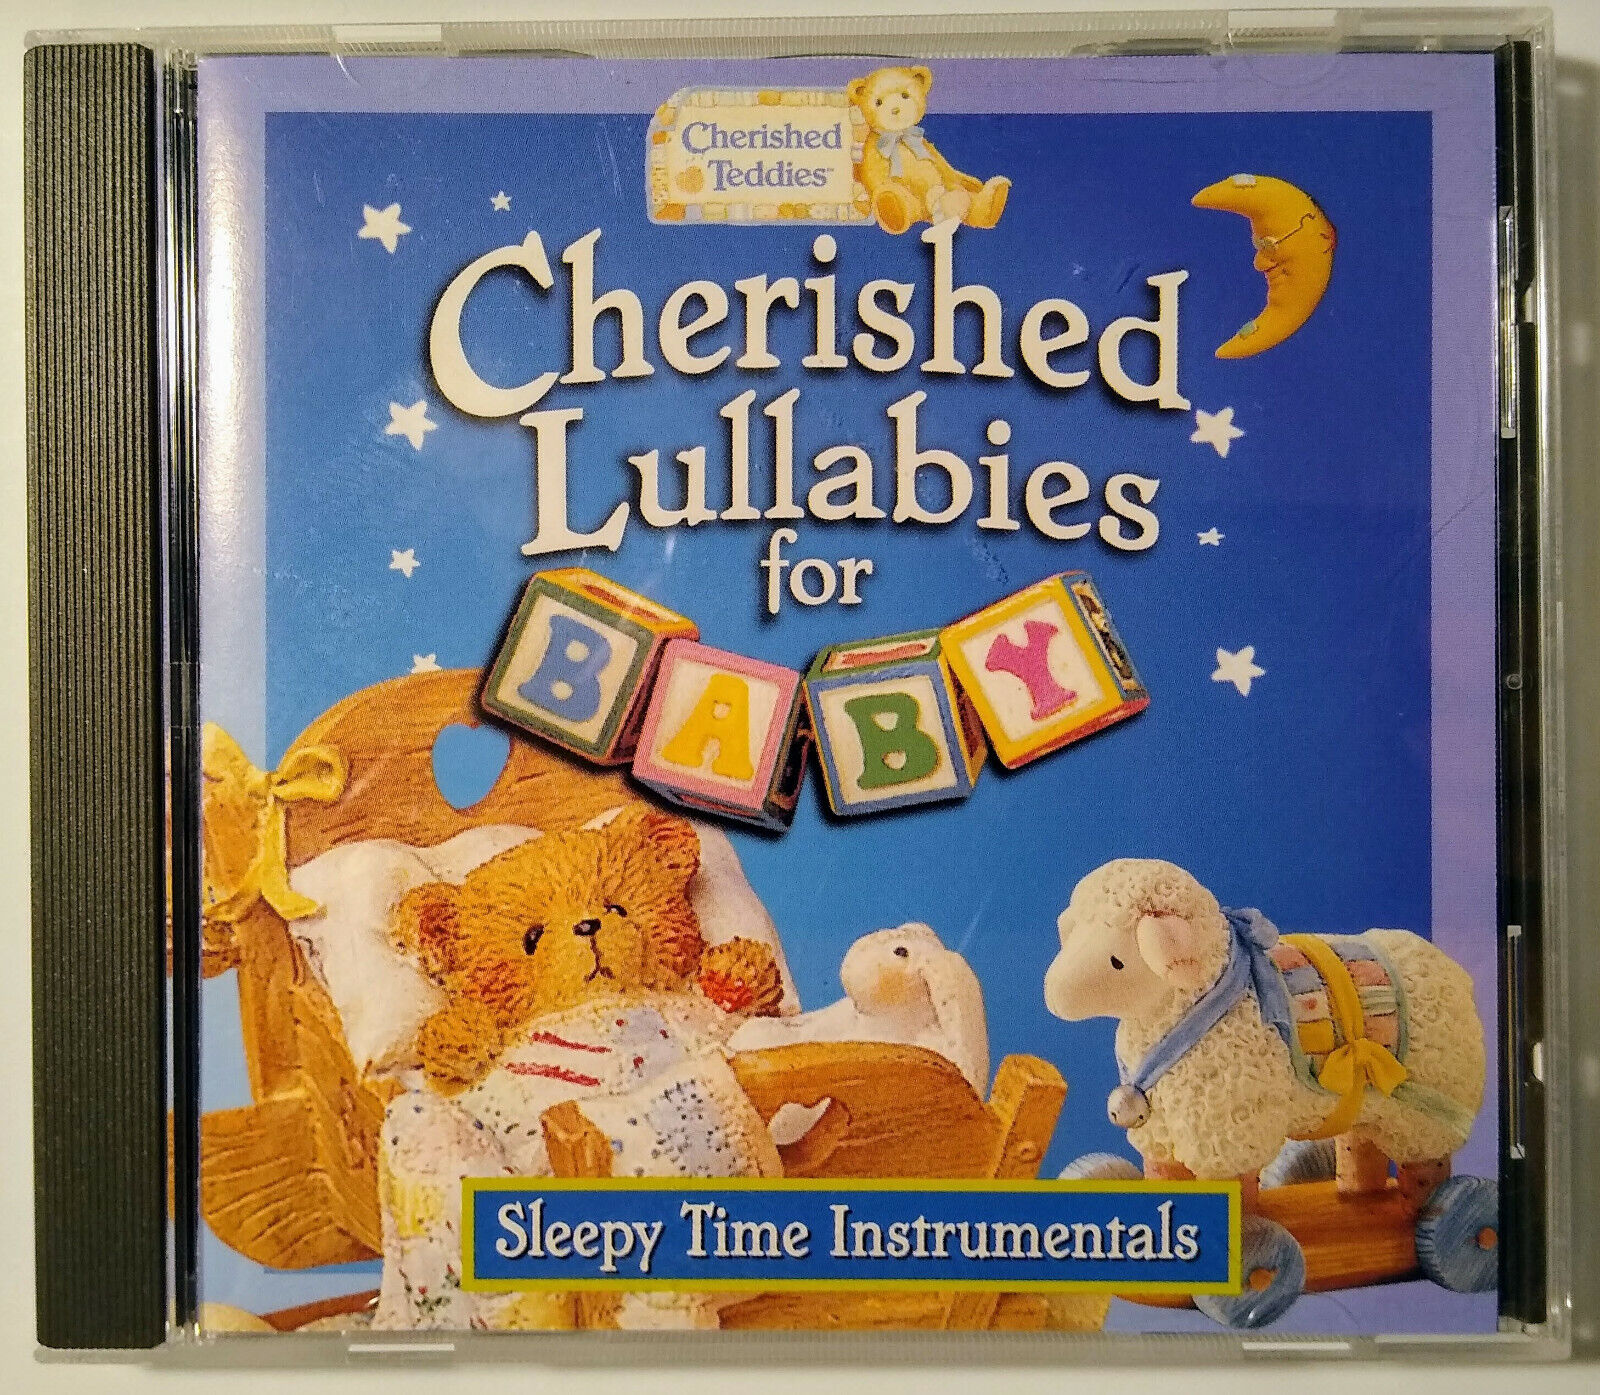 CD C Cherished Teddies Lullabies for Baby Sleepy Time Instrumentals 1998 Tukaiz